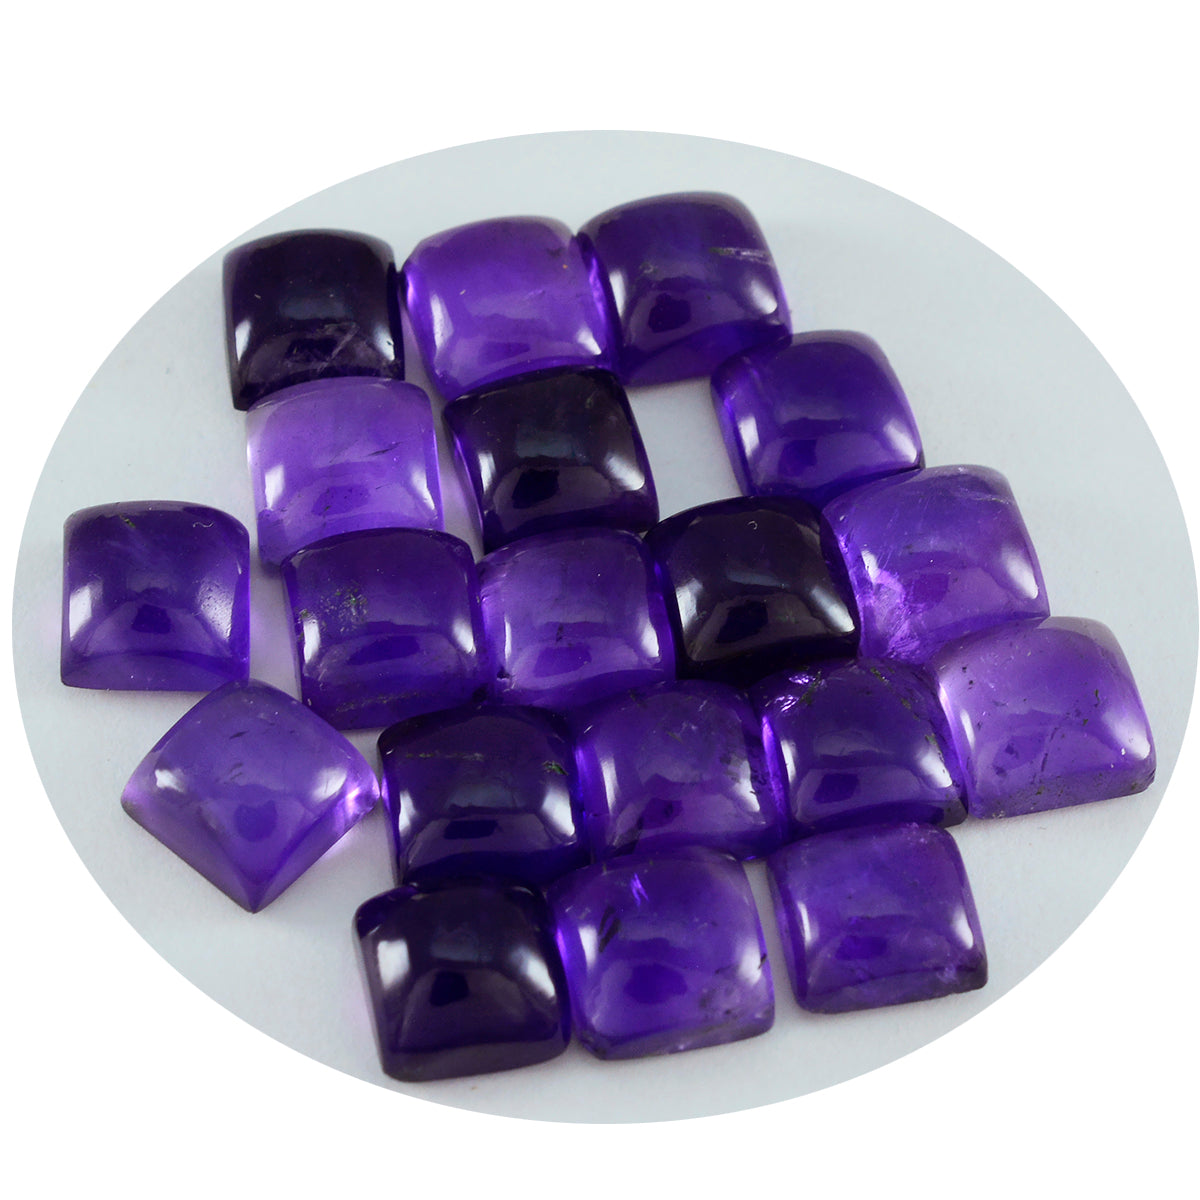 Riyogems 1PC Purple Amethyst Cabochon 10x10 mm Square Shape good-looking Quality Loose Gems